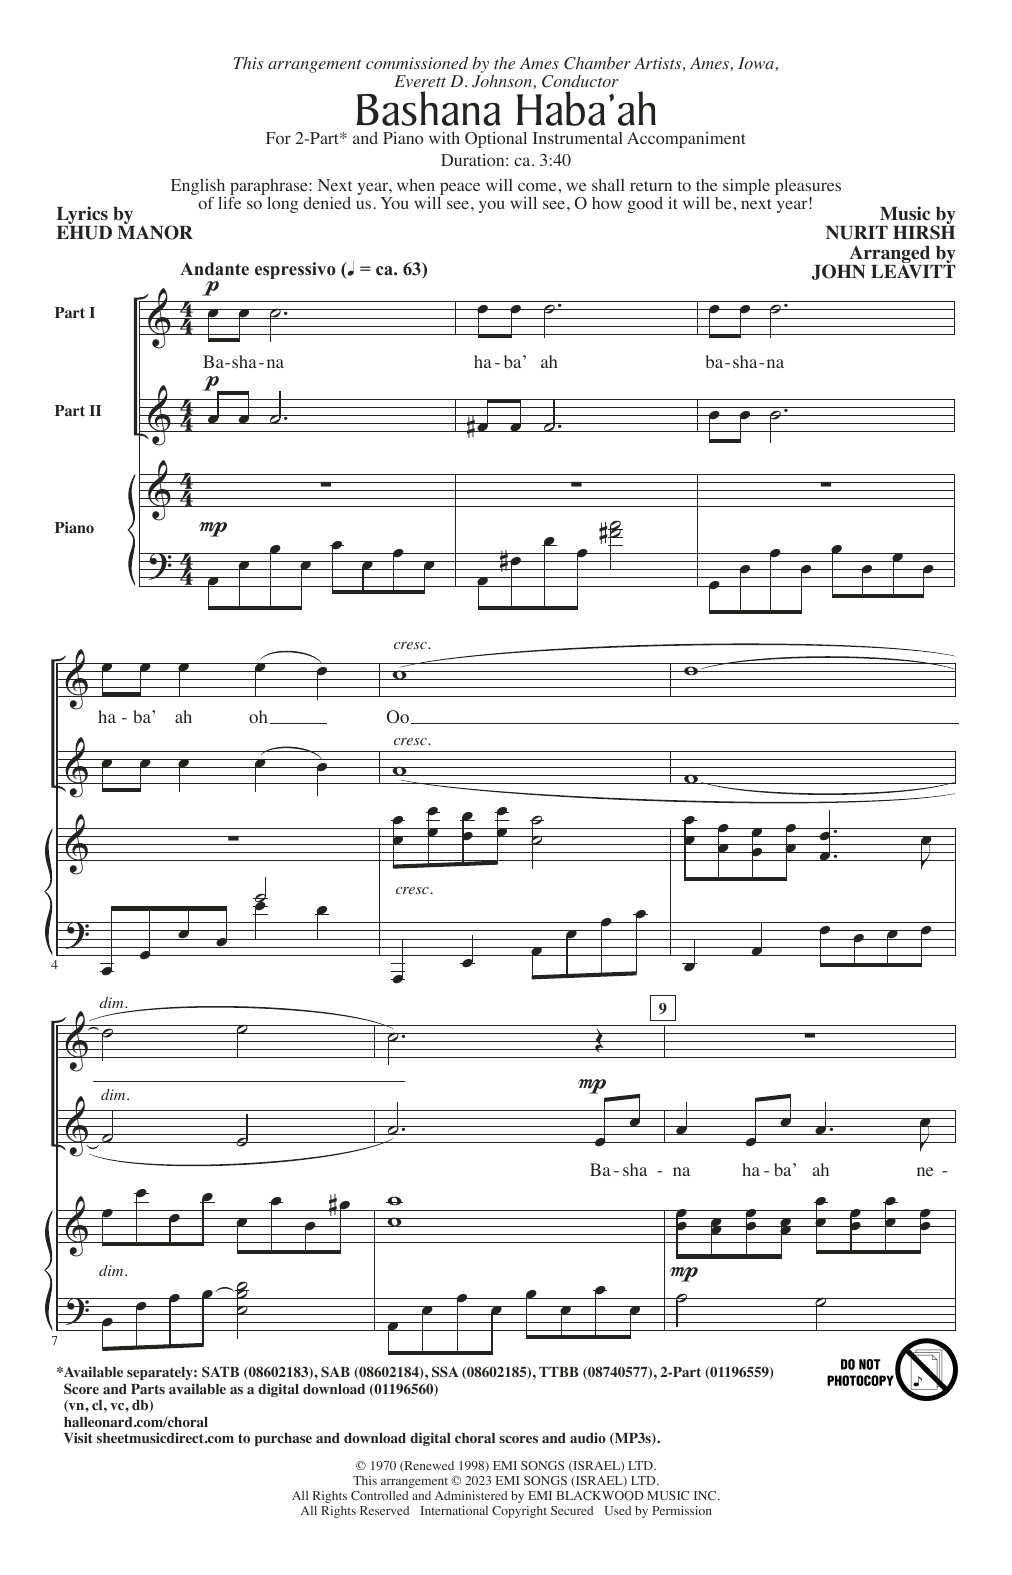 Download Nurit Hirsh Bashana Haba'ah (arr. John Leavitt) Sheet Music and learn how to play SATB Choir PDF digital score in minutes